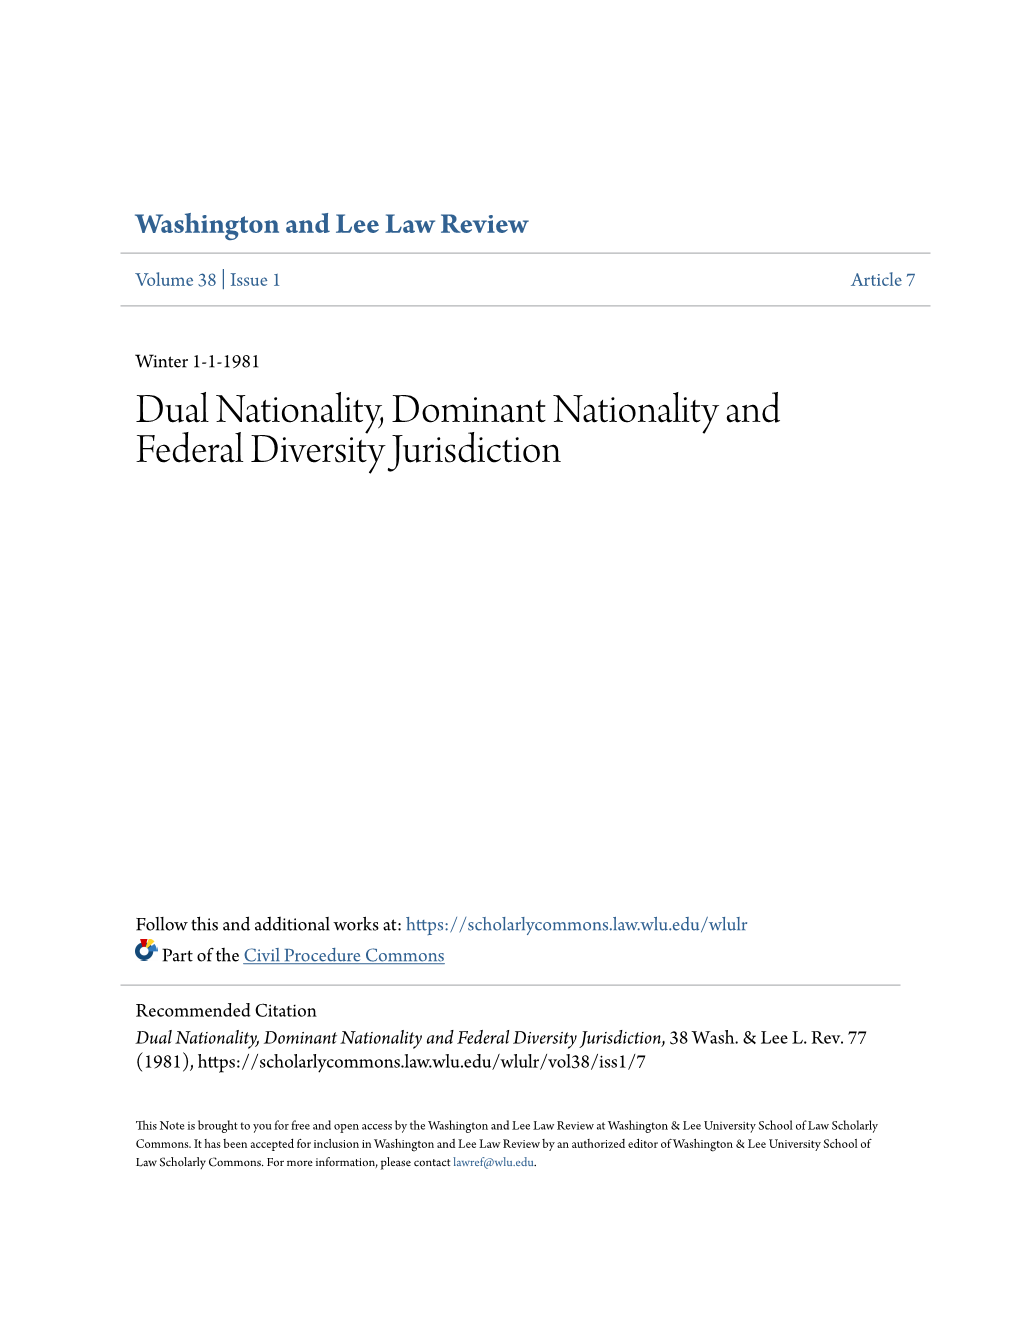 Dual Nationality, Dominant Nationality and Federal Diversity Jurisdiction